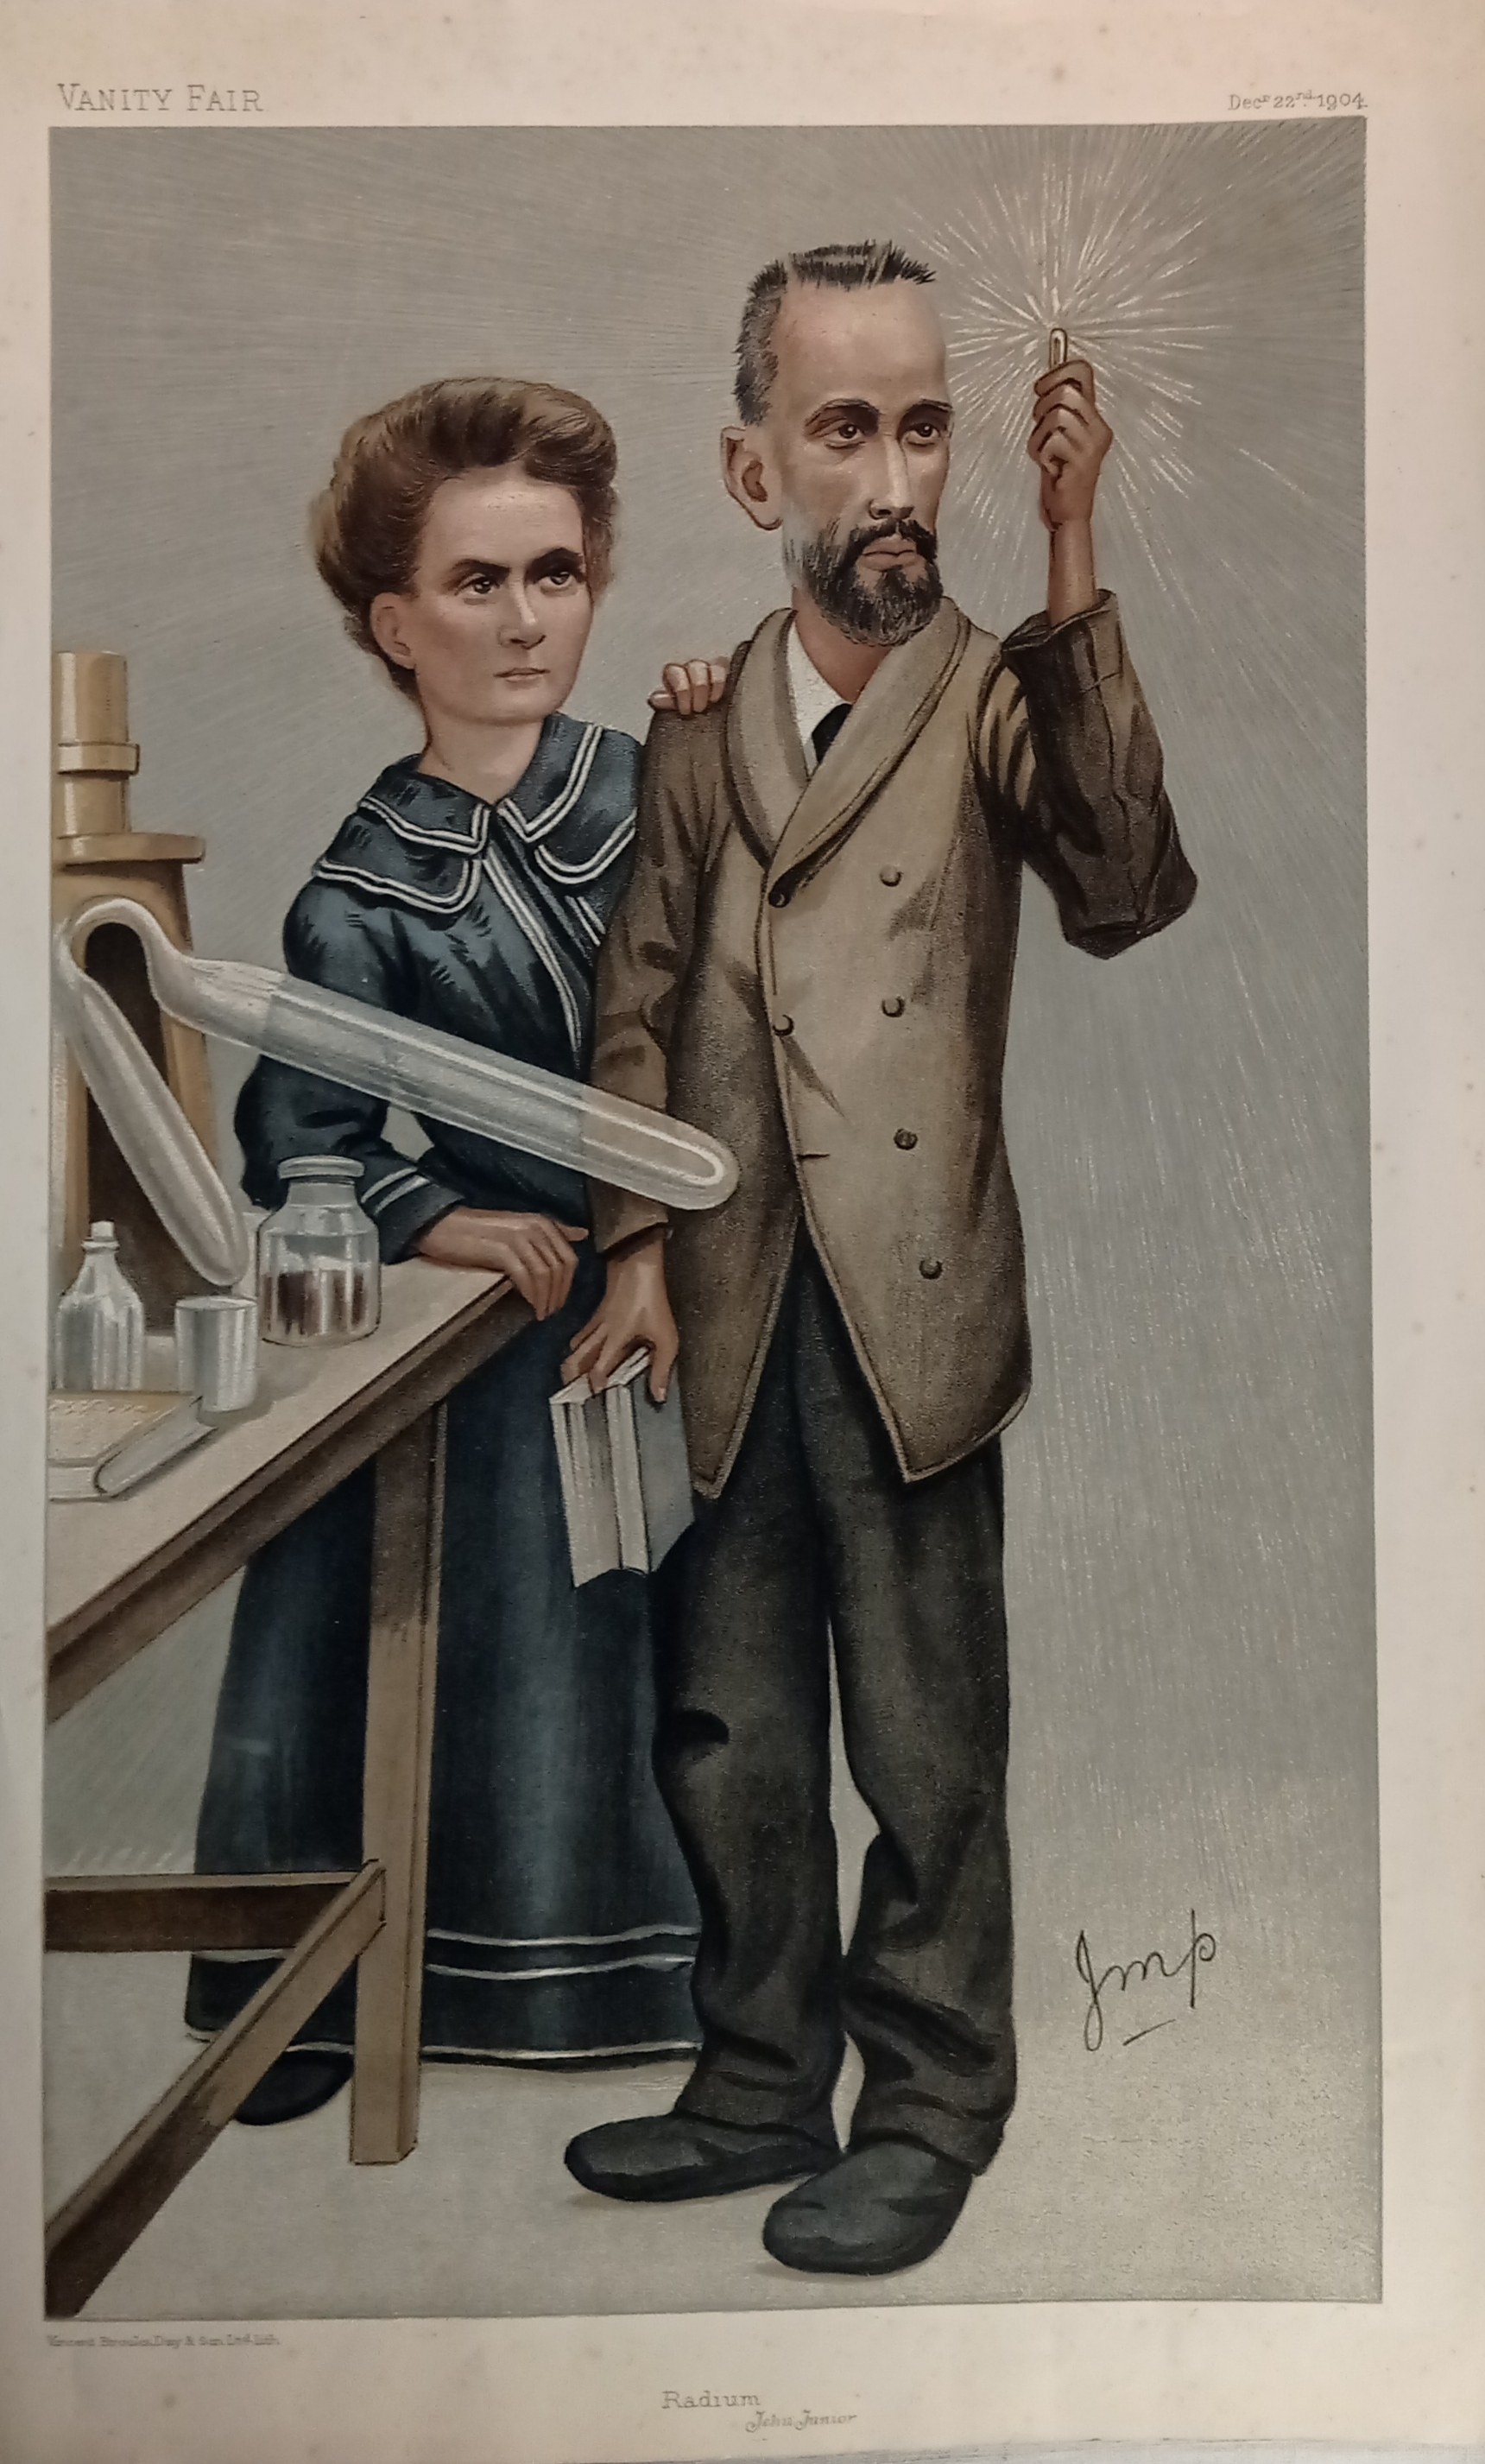 1904. VANITY FAIR, Marie and Pierre Curie „Radium”. - Δημοπρασία διαδικτύου  / Διαδικτυακή προσφορά - Τιμή - OneBid